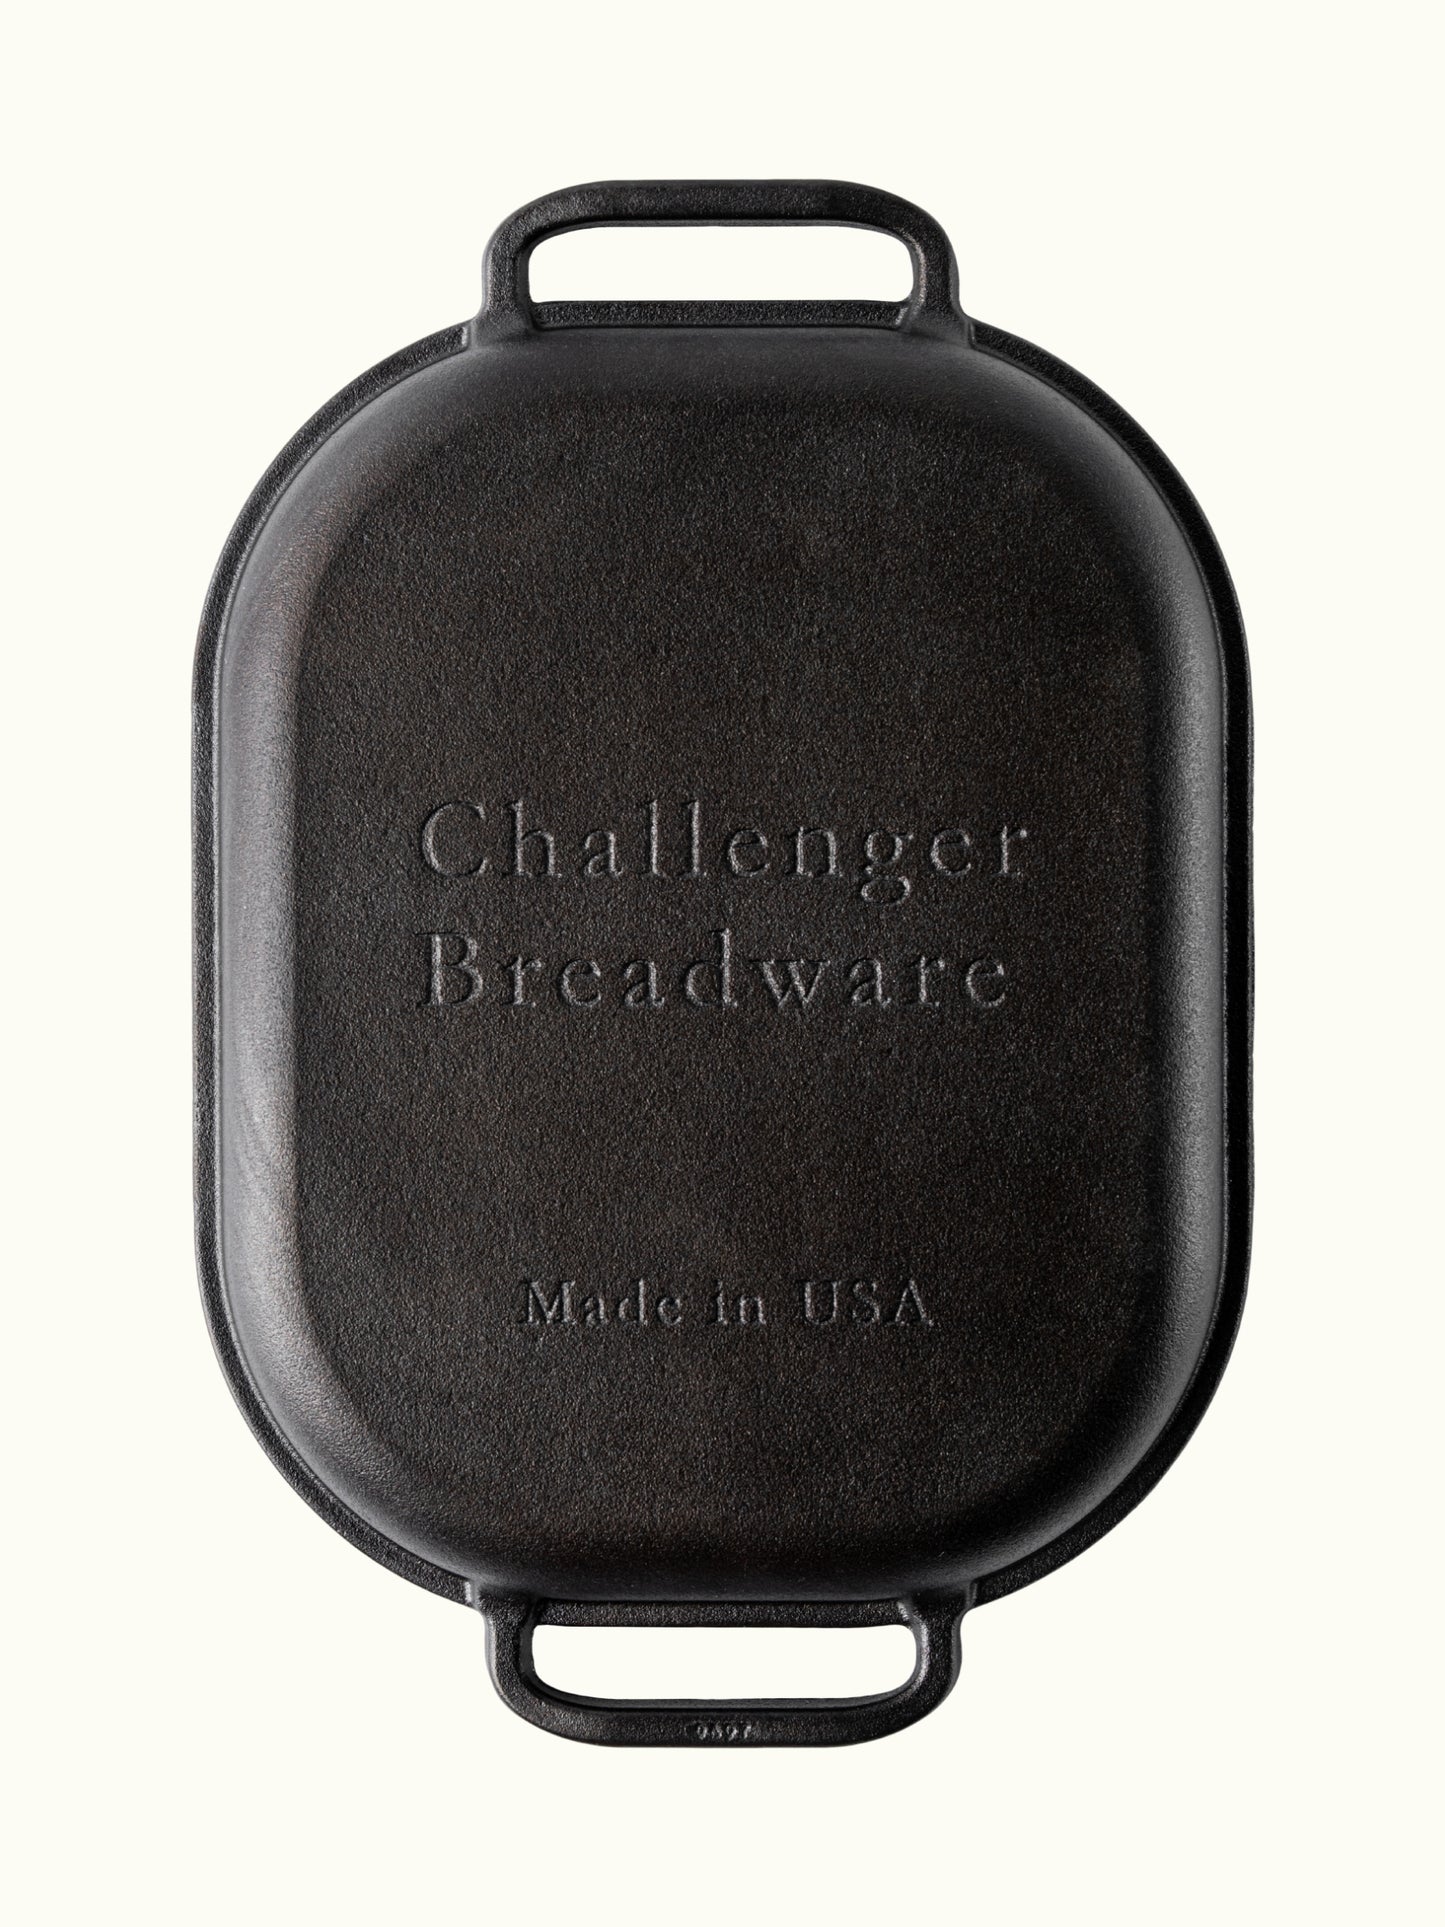 Challenger Breadpan